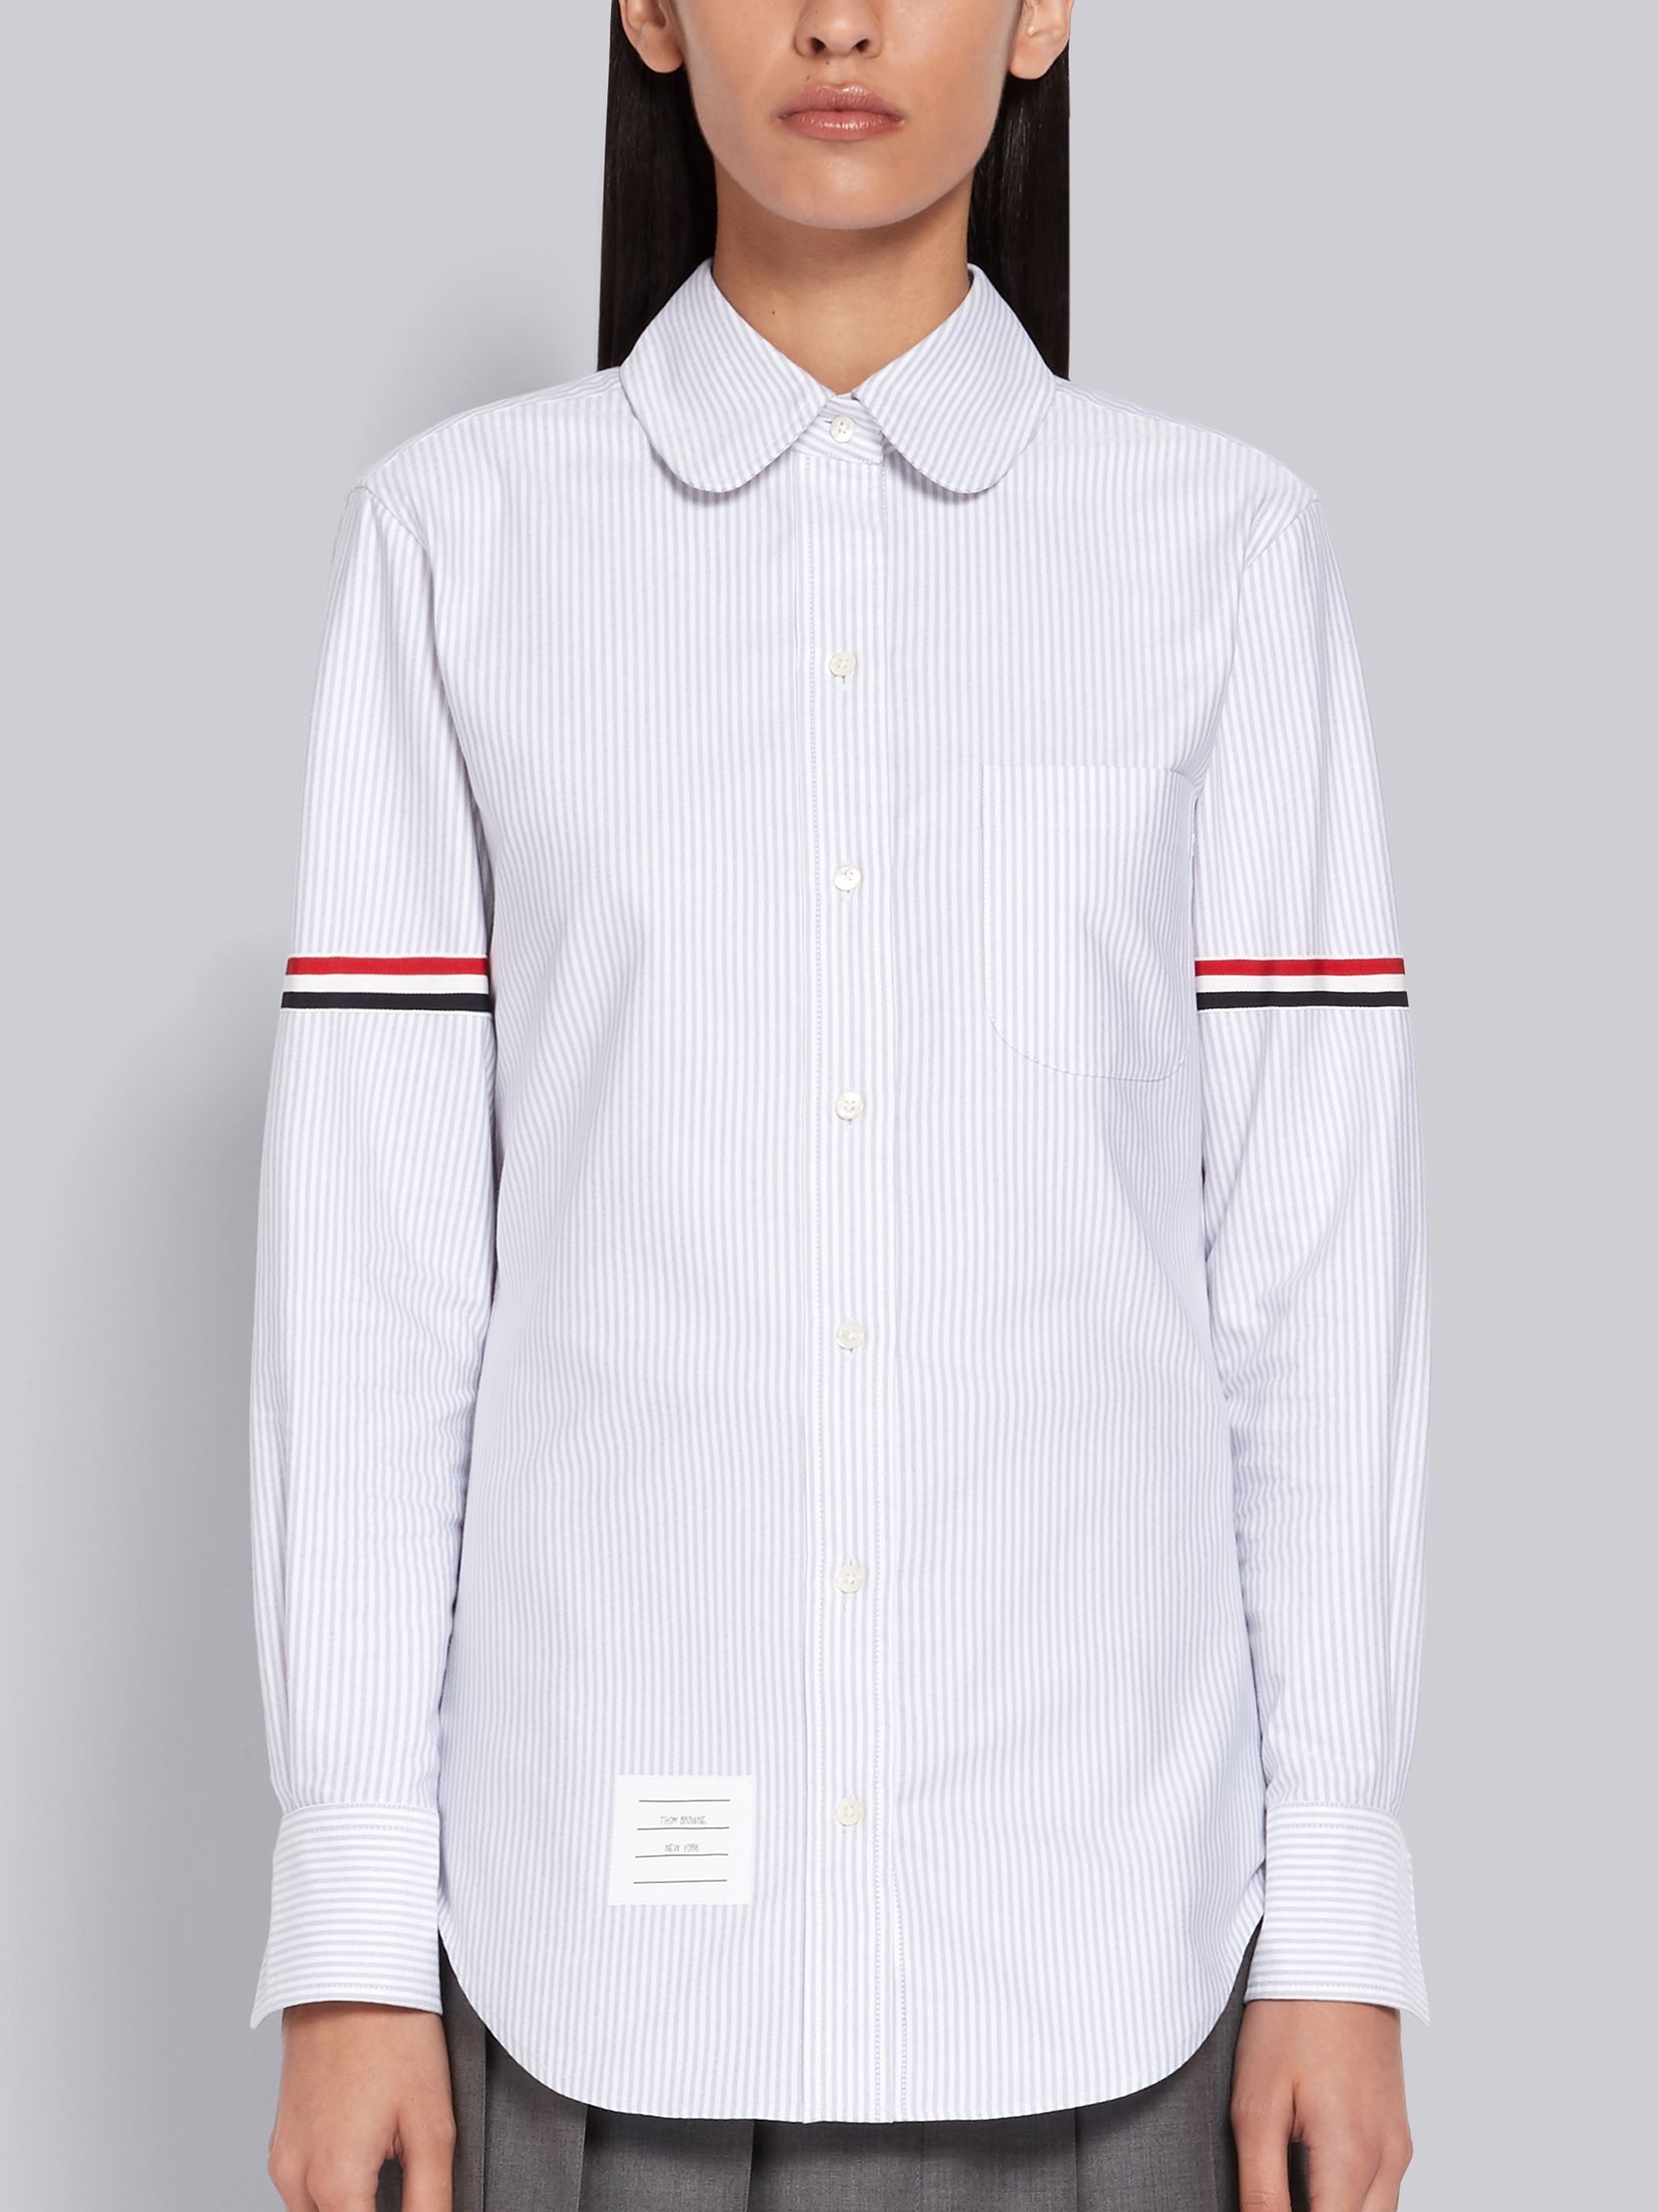 Medium Grey University Stripe Oxford Grosgrain Armband Long Sleeve Shirt - 3